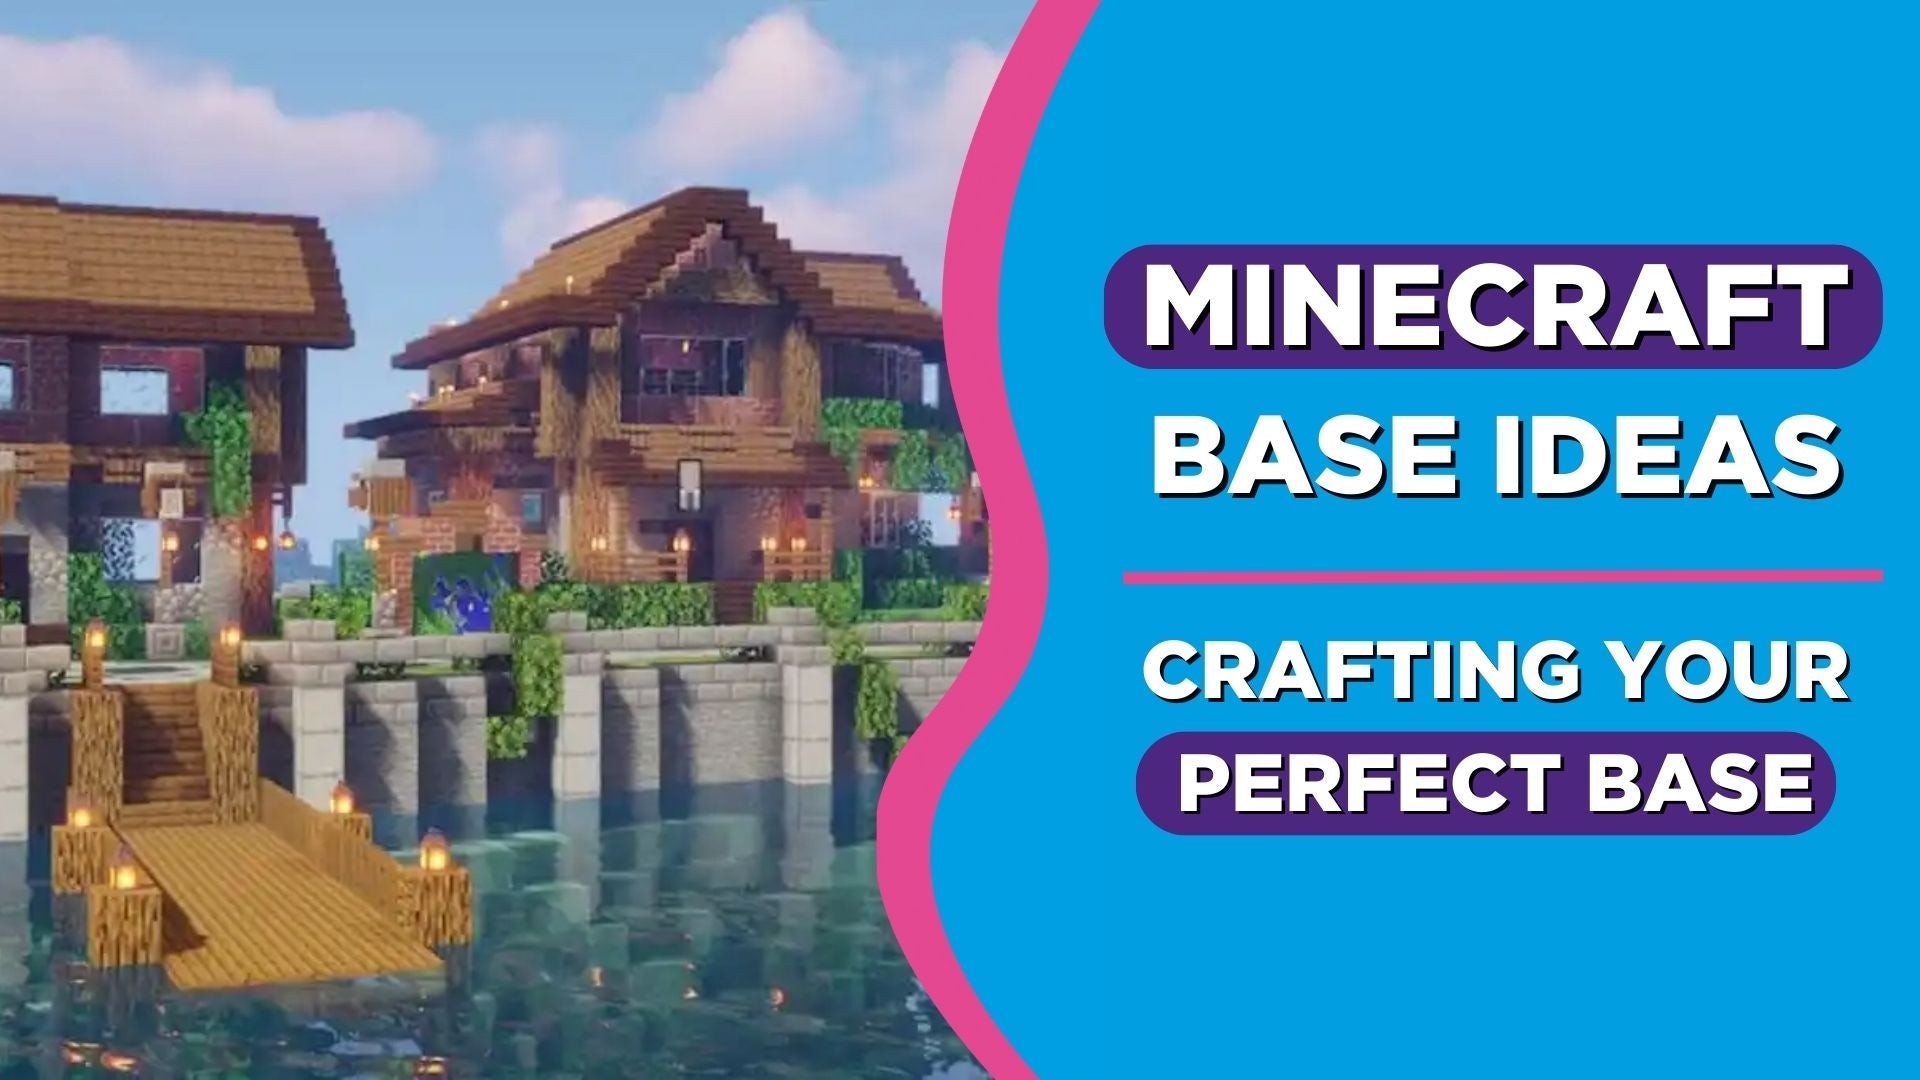 Minecraft base ideas: crafting perfect base - Gamestate